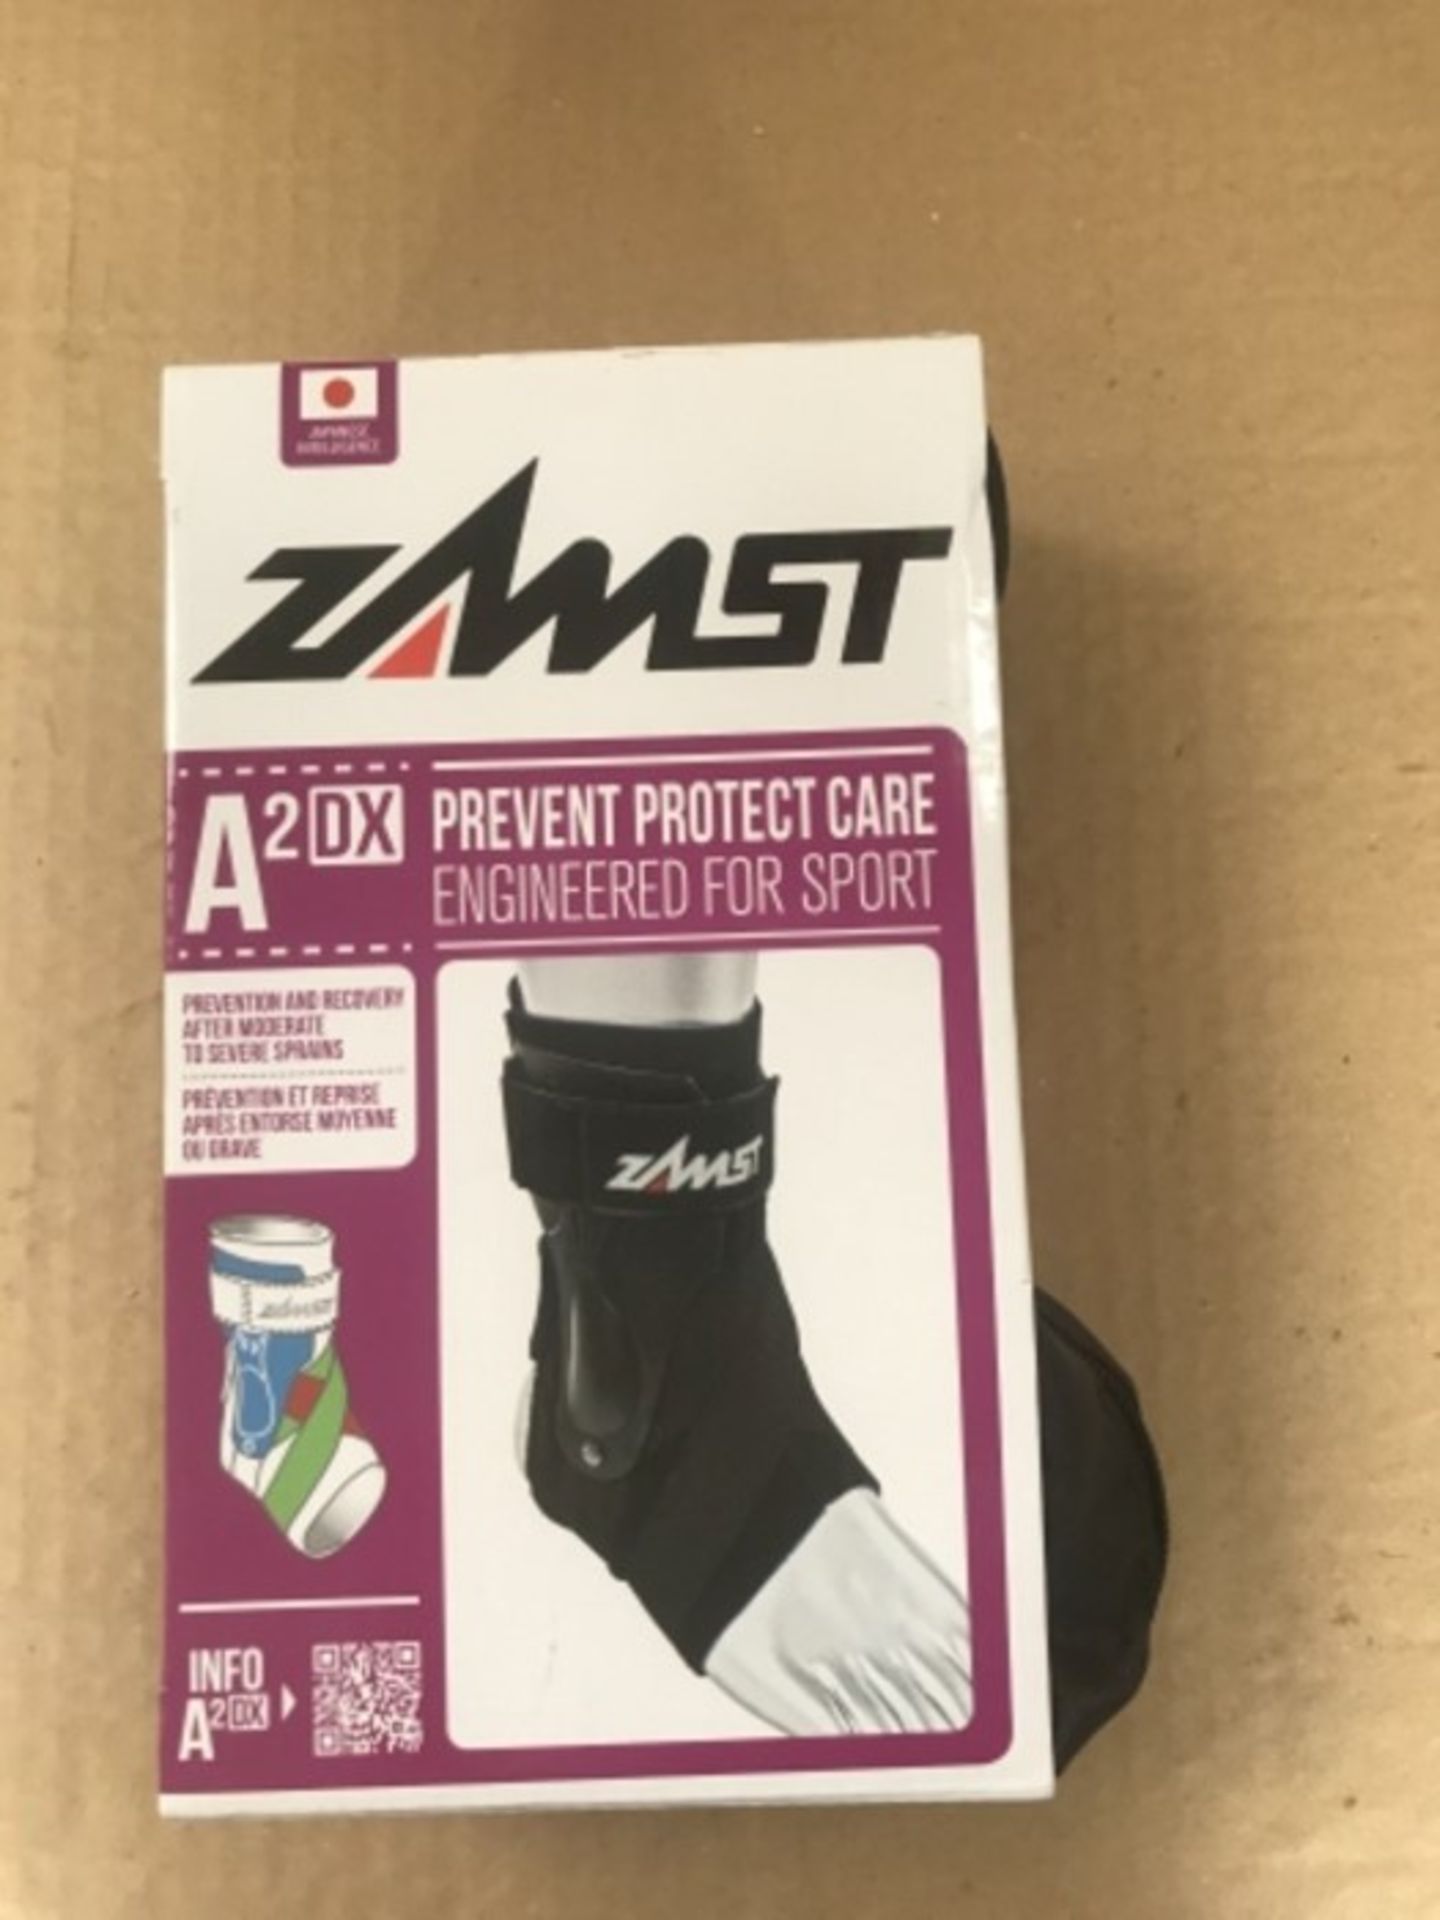 Zamst A2 DX Left Ankle Support - Black, Medium - Image 2 of 2